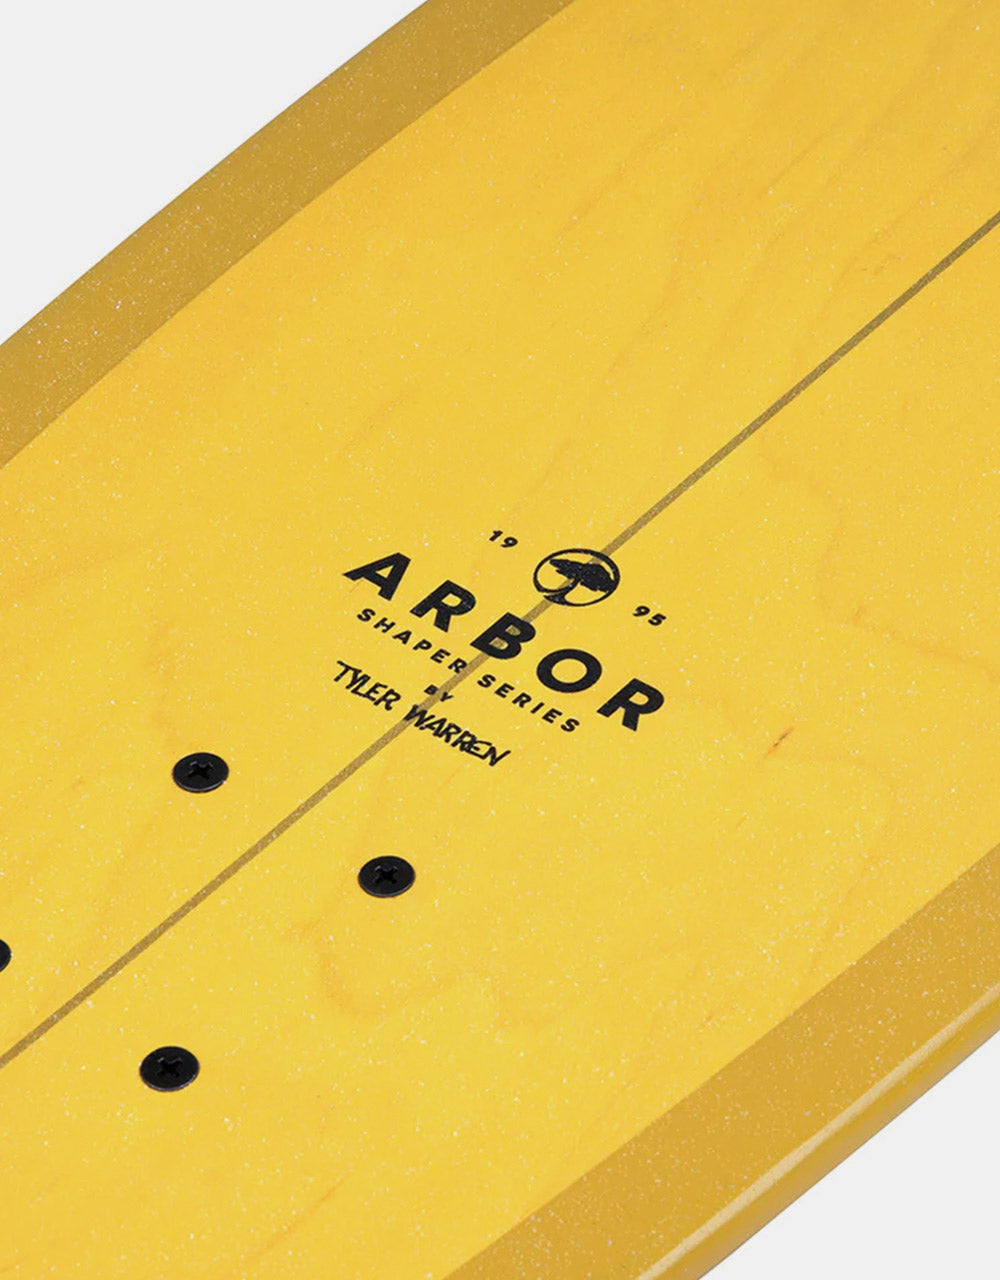 Arbor x Tyler Warren Shaper SurfSkate Cruiser - 9.875" x 29"